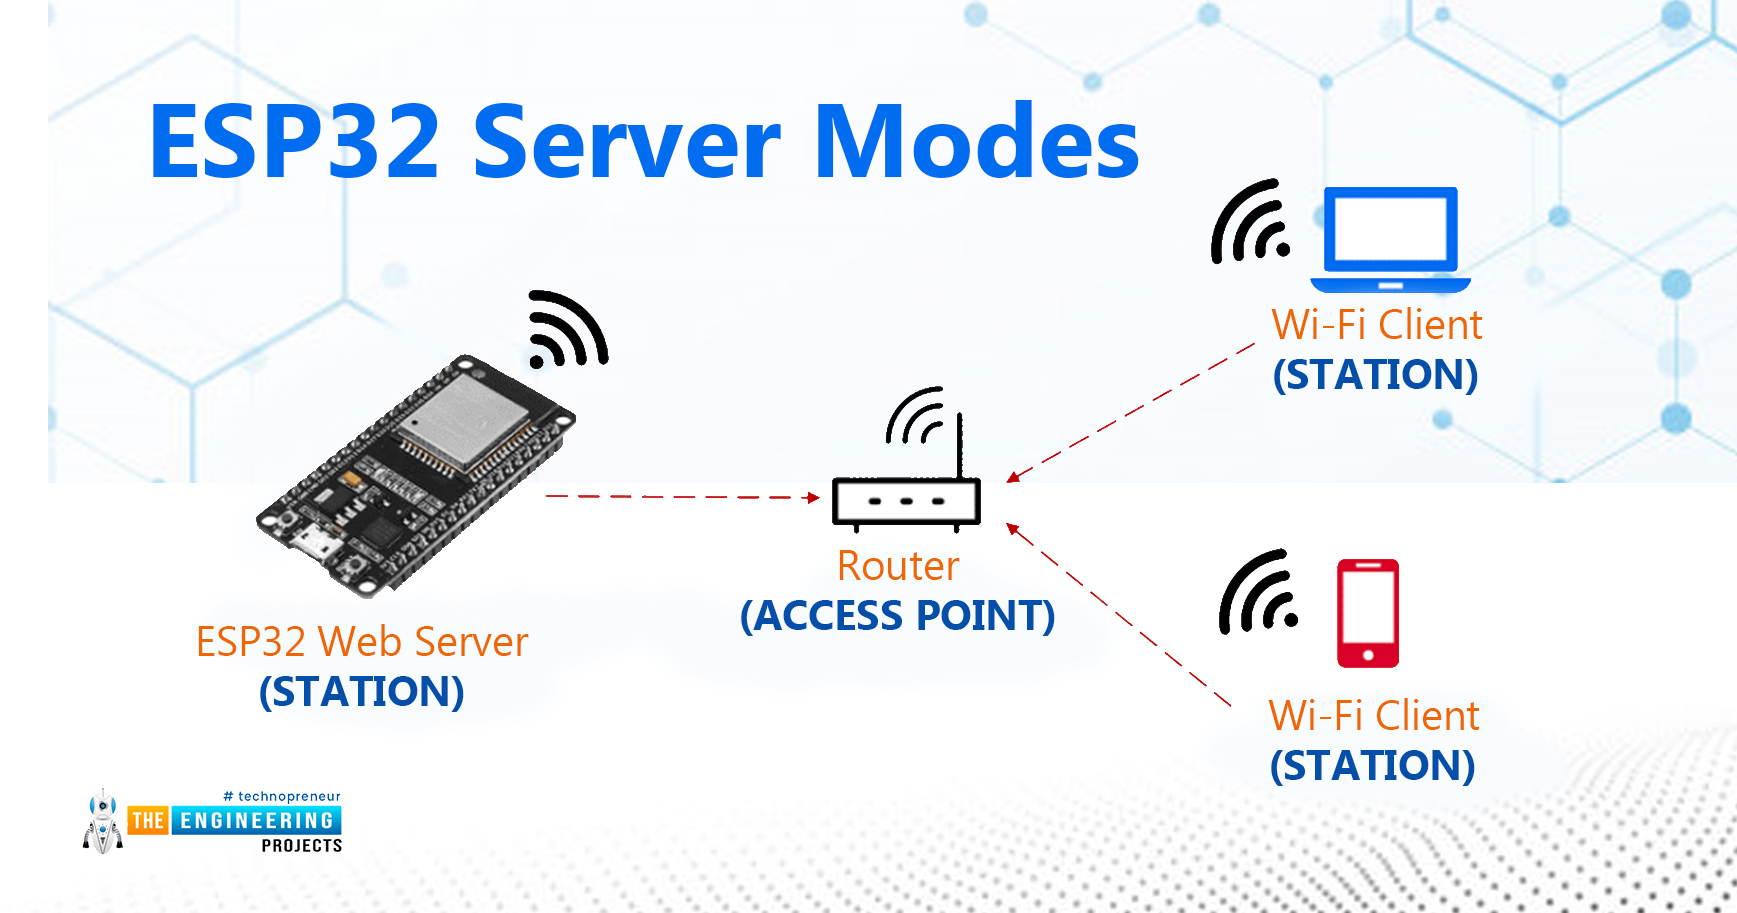 esp32, esp32 wifi, esp32 web server, esp32 webserver, webserver esp32, web server esp32, esp32 server mode